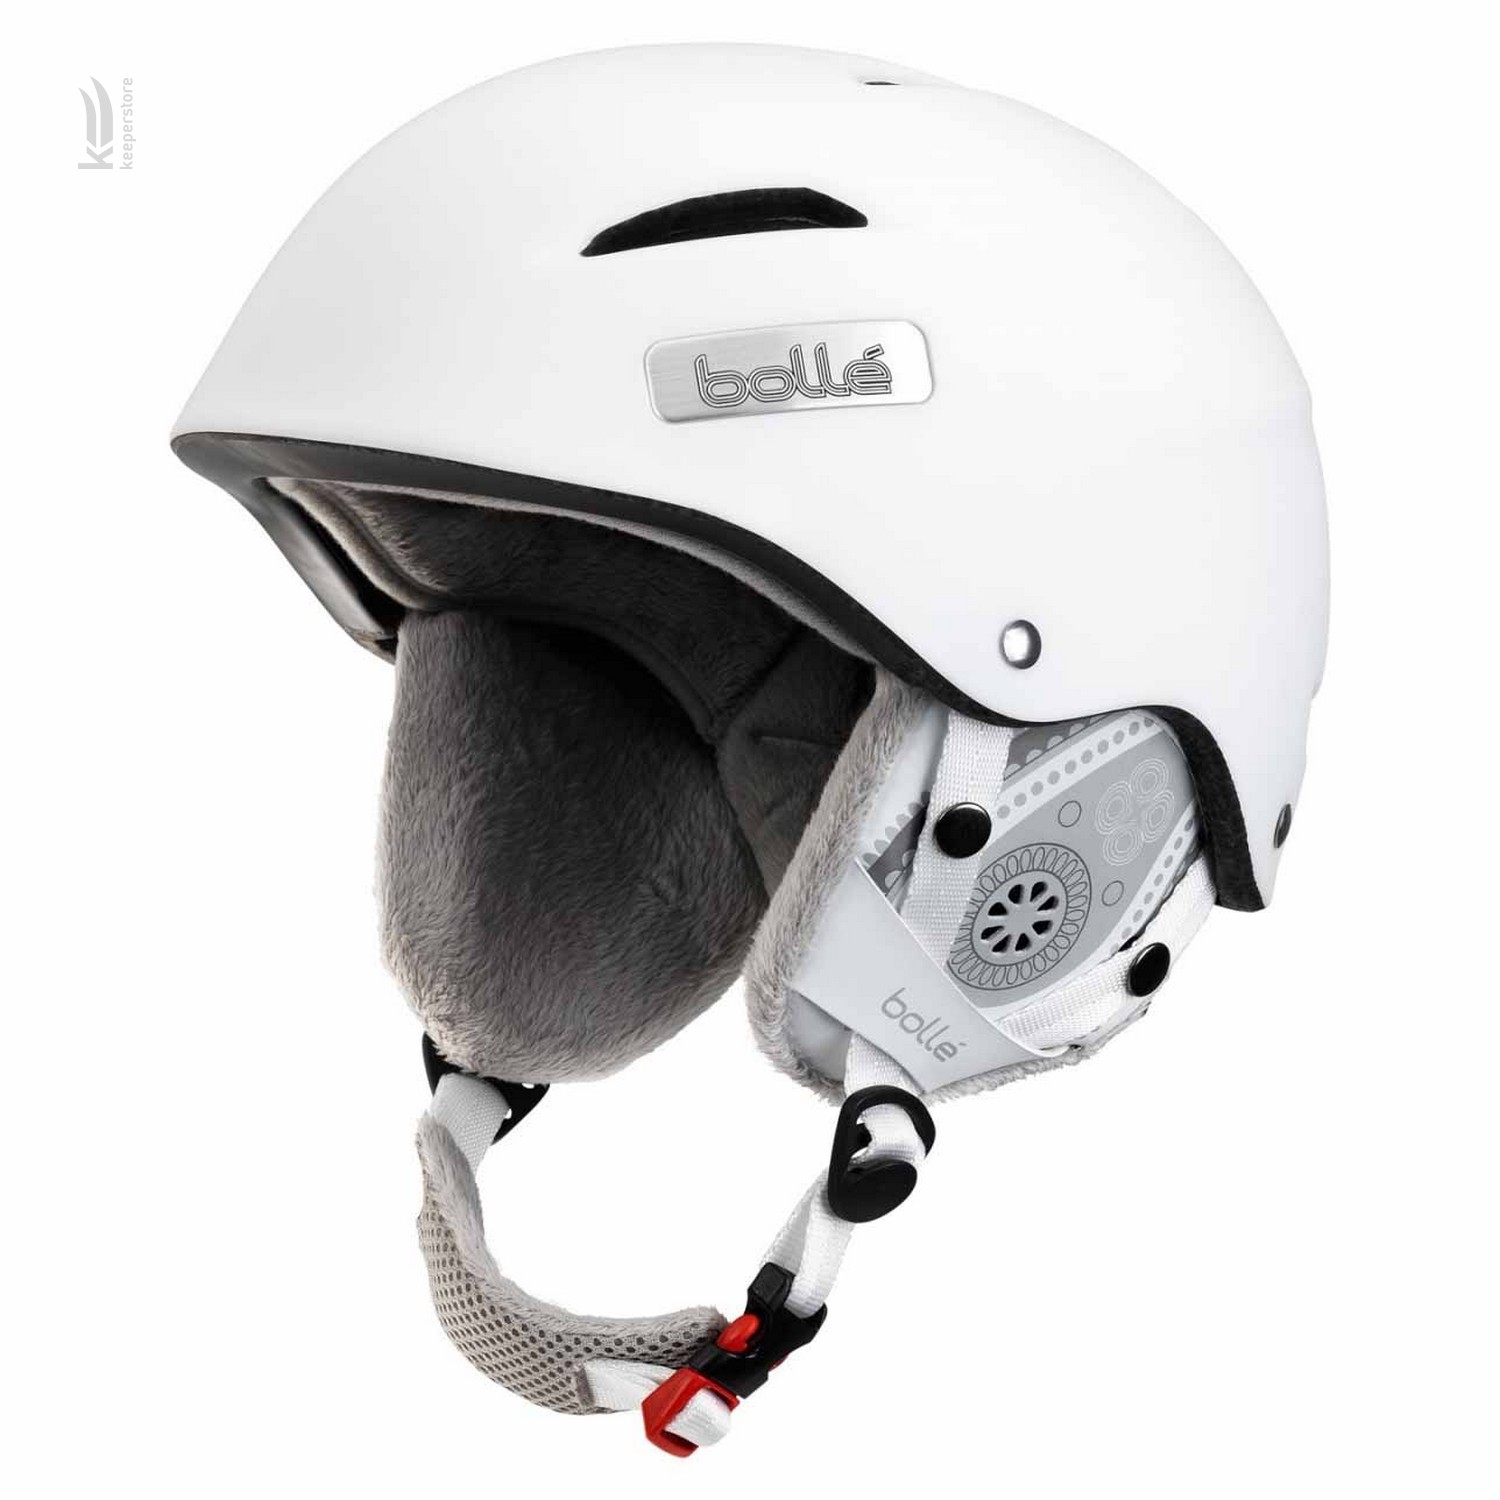 Шлем для сноубординга Bolle B-Lieve Anna Veith Signature Series (M)